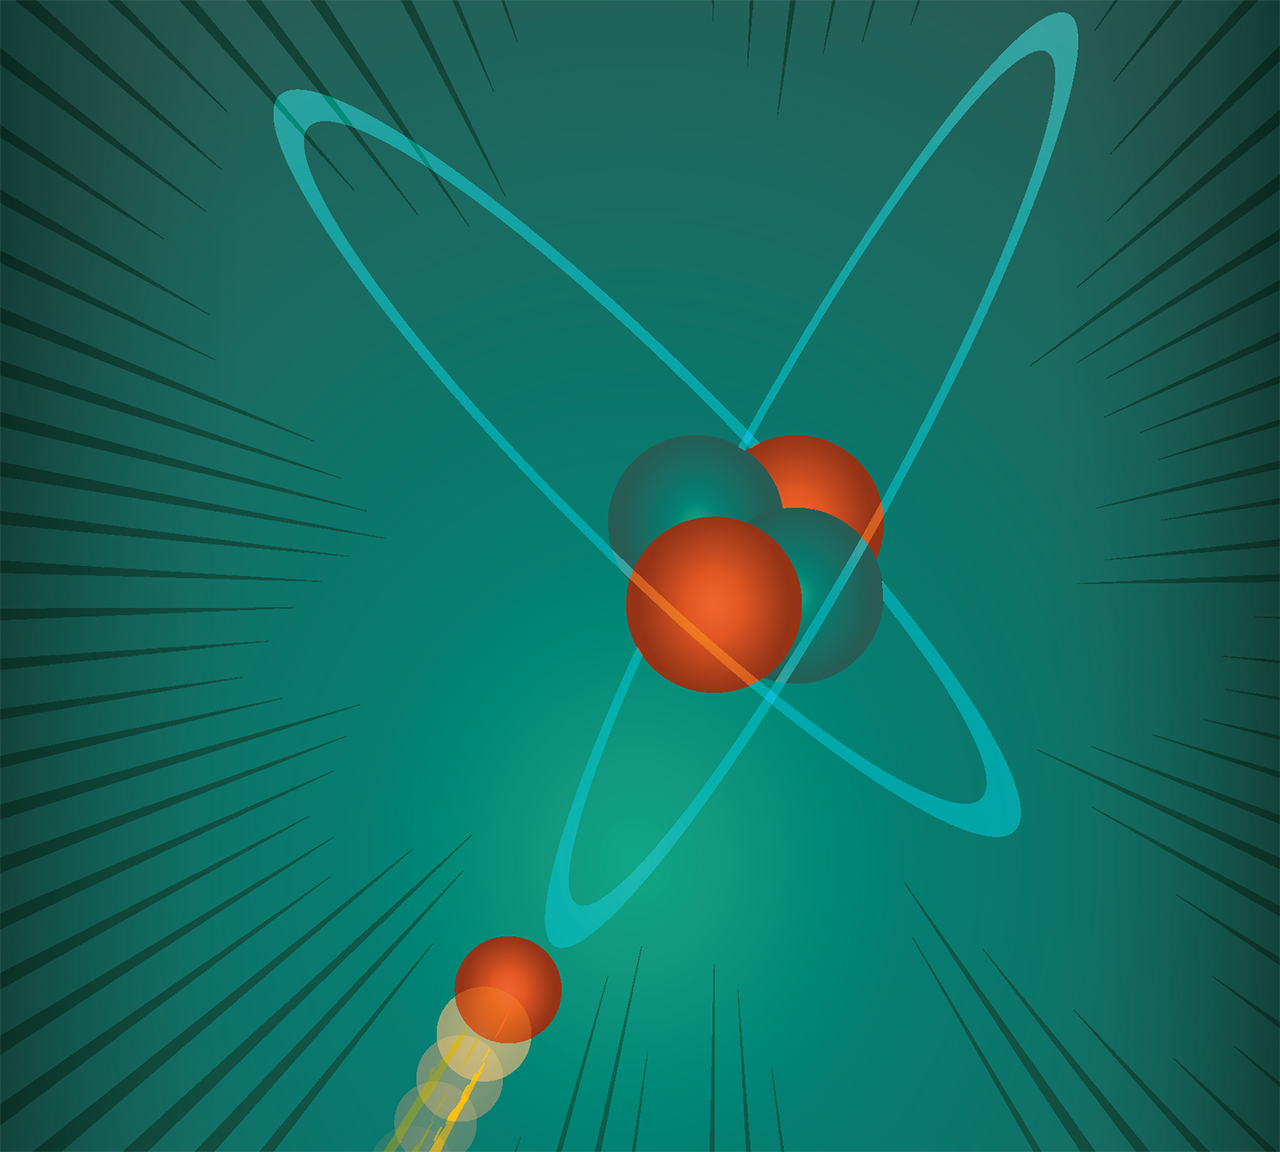 Atom illustration by Sean Thornton